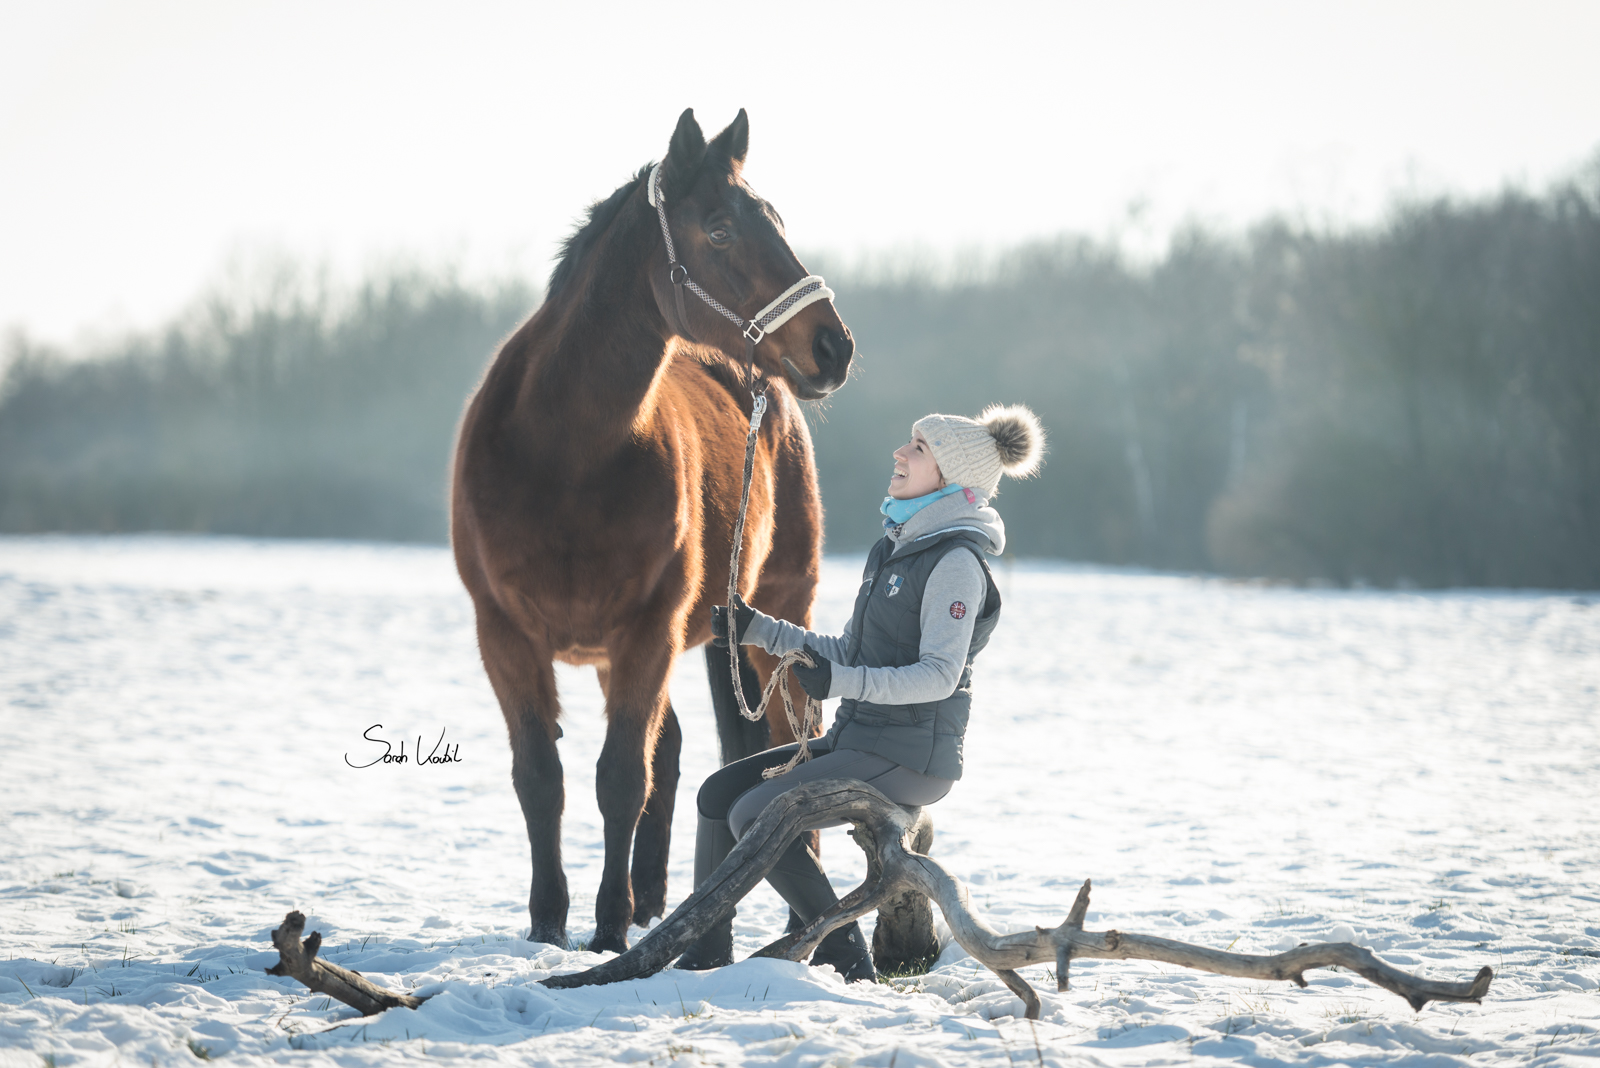 Fotoshooting mit Pferd im Schnee | Pferdefotografie | Sarah Koutnik Fotografie